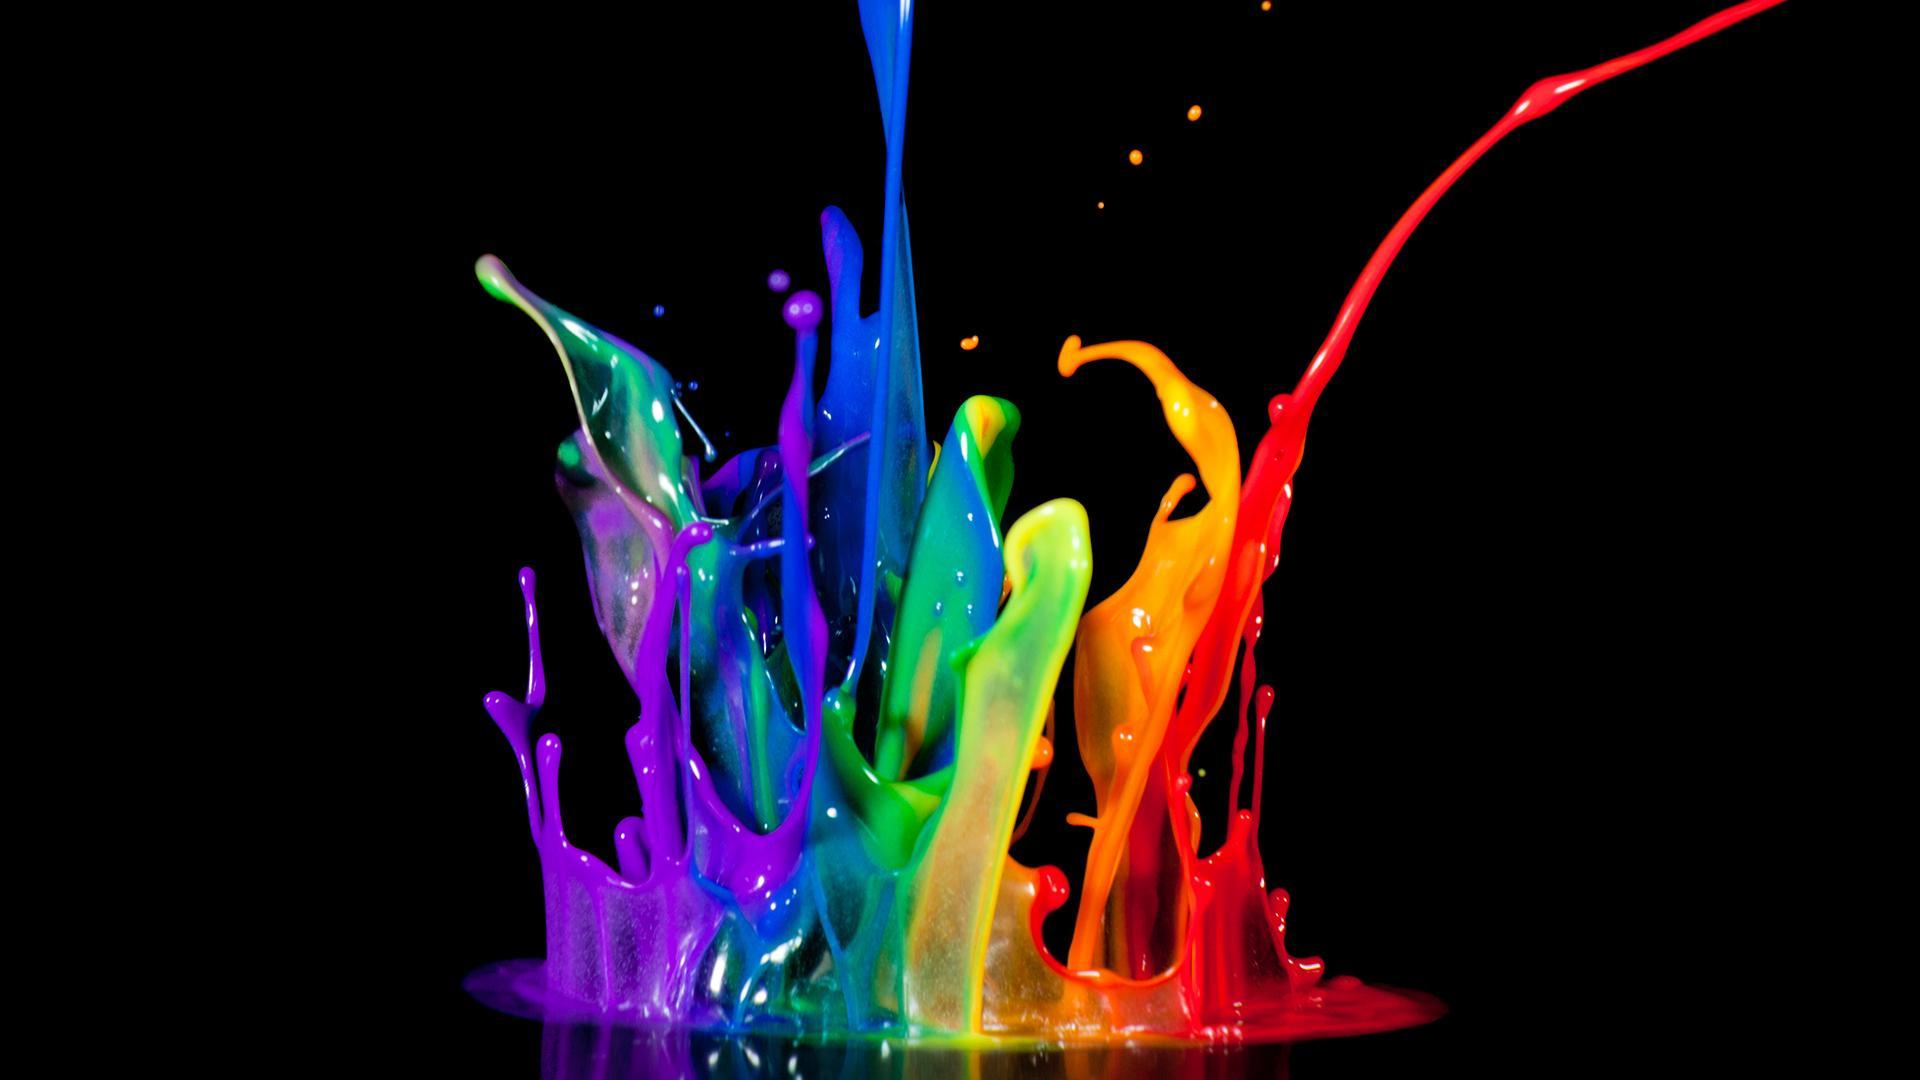 Color Splash Wallpaper